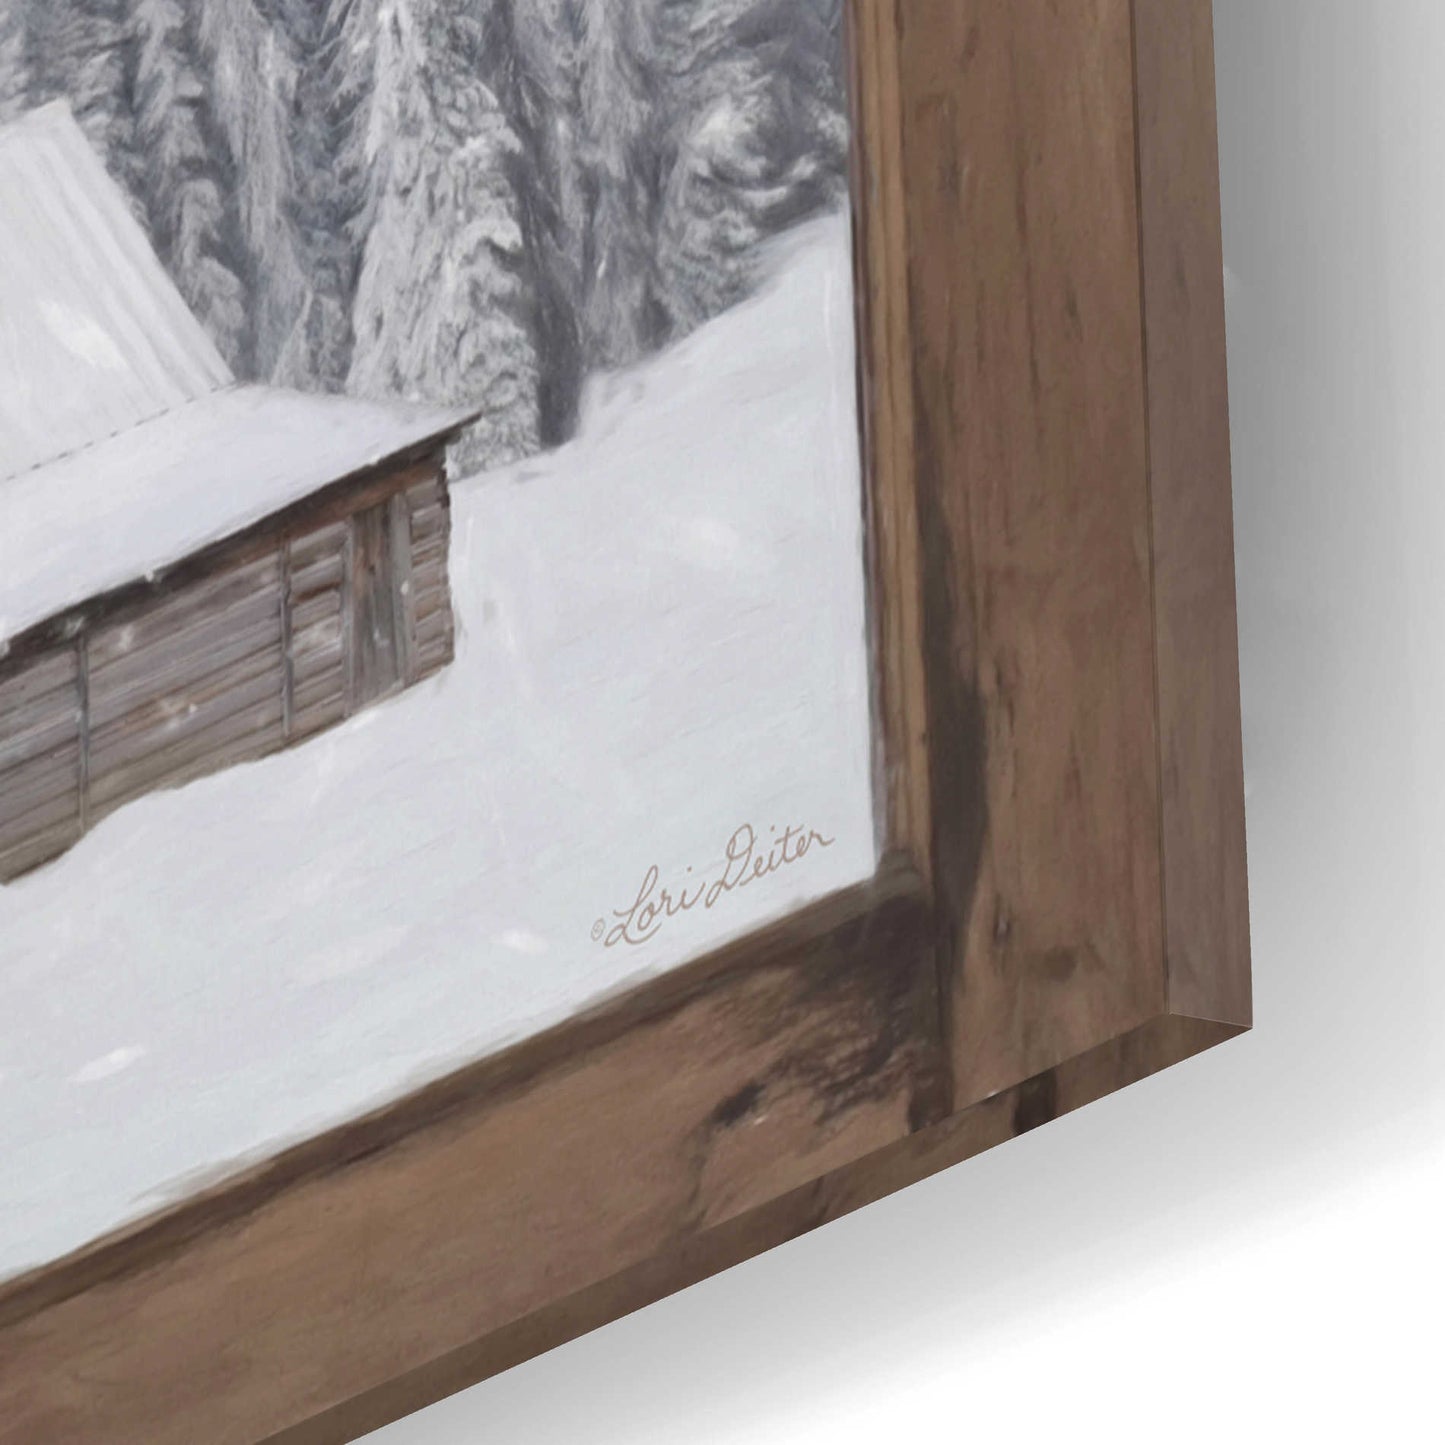 Epic Art 'Teton Christmas Window' by Lori Deiter Acrylic Glass Wall Art,12x16